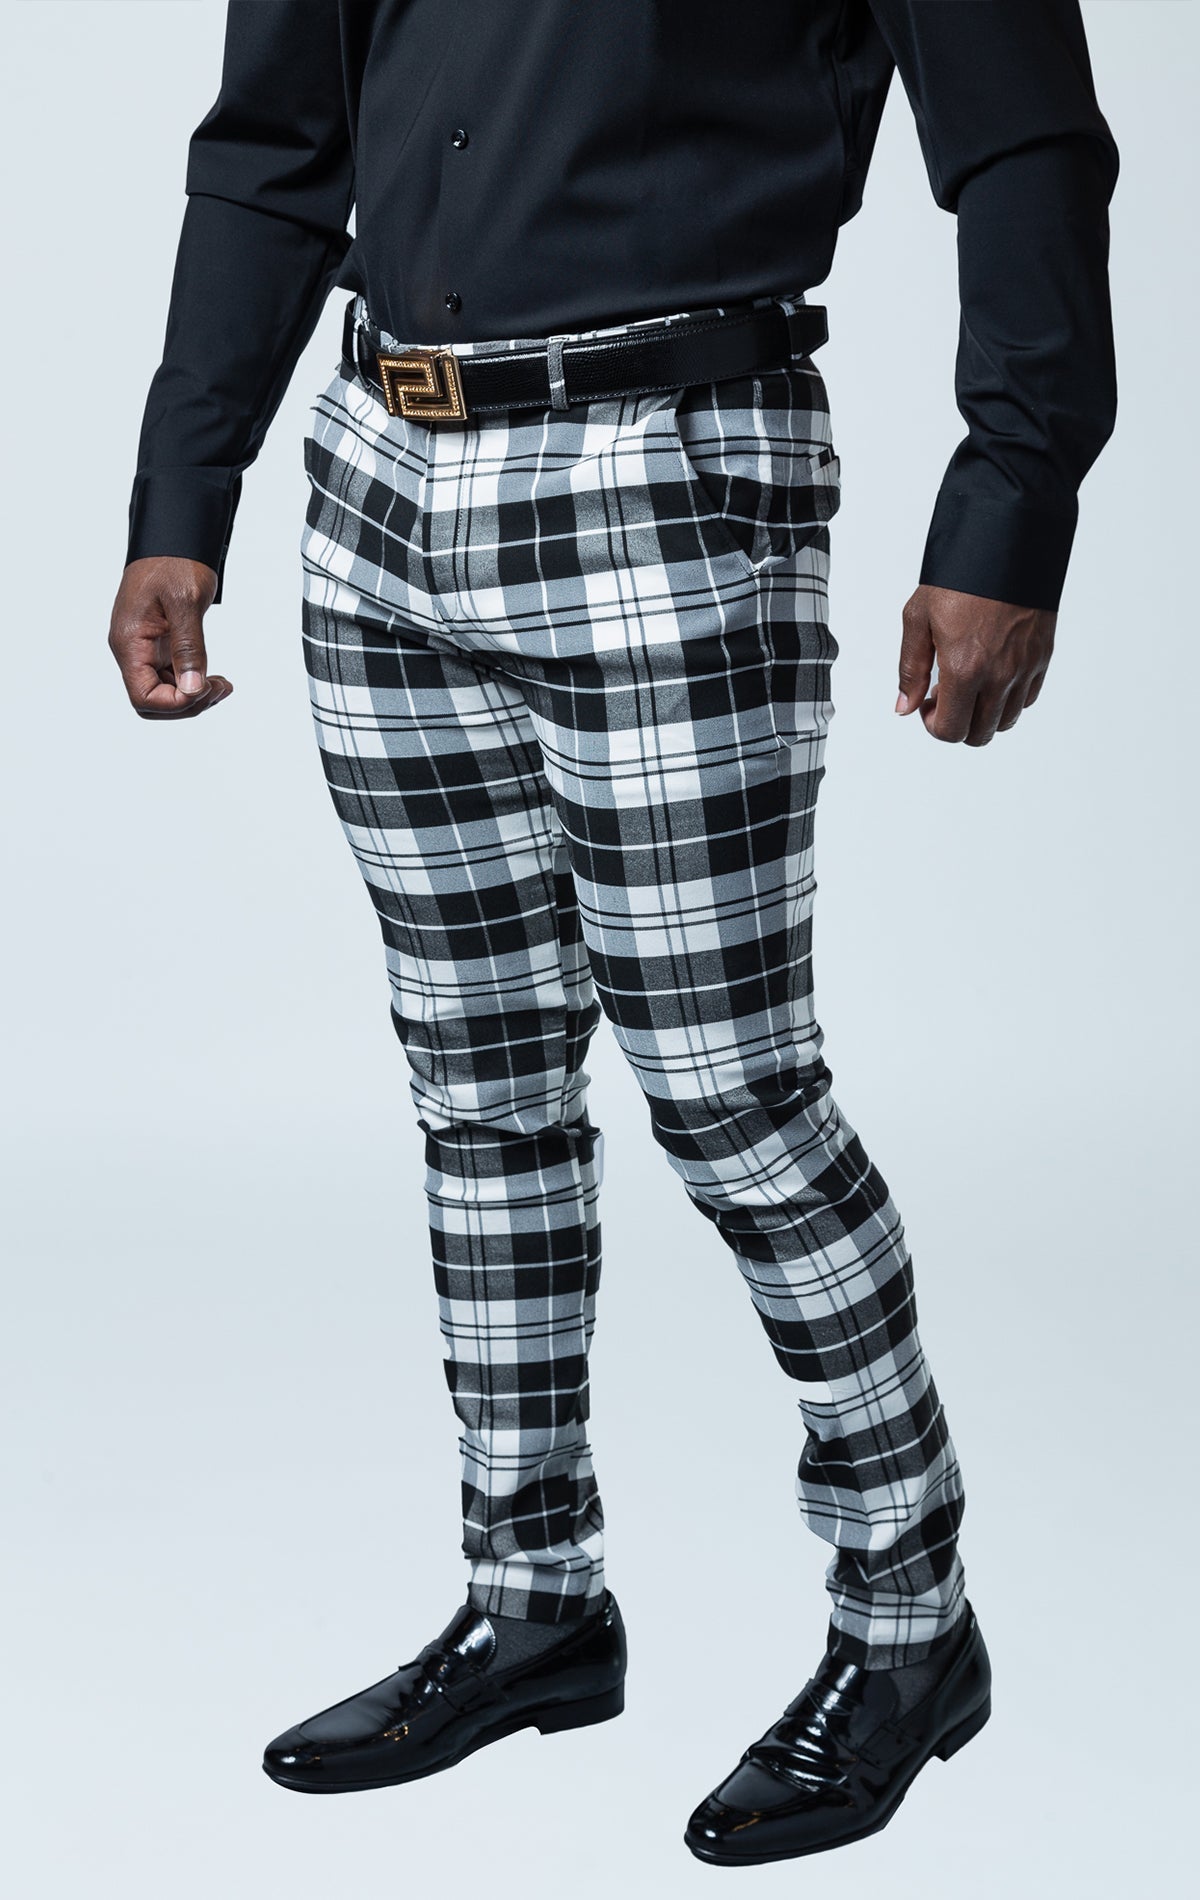 BBS Double Eagle - DENiMPiRE, Men's designer pants with elastic waistband technology, available in black and white, Barabas Men design.